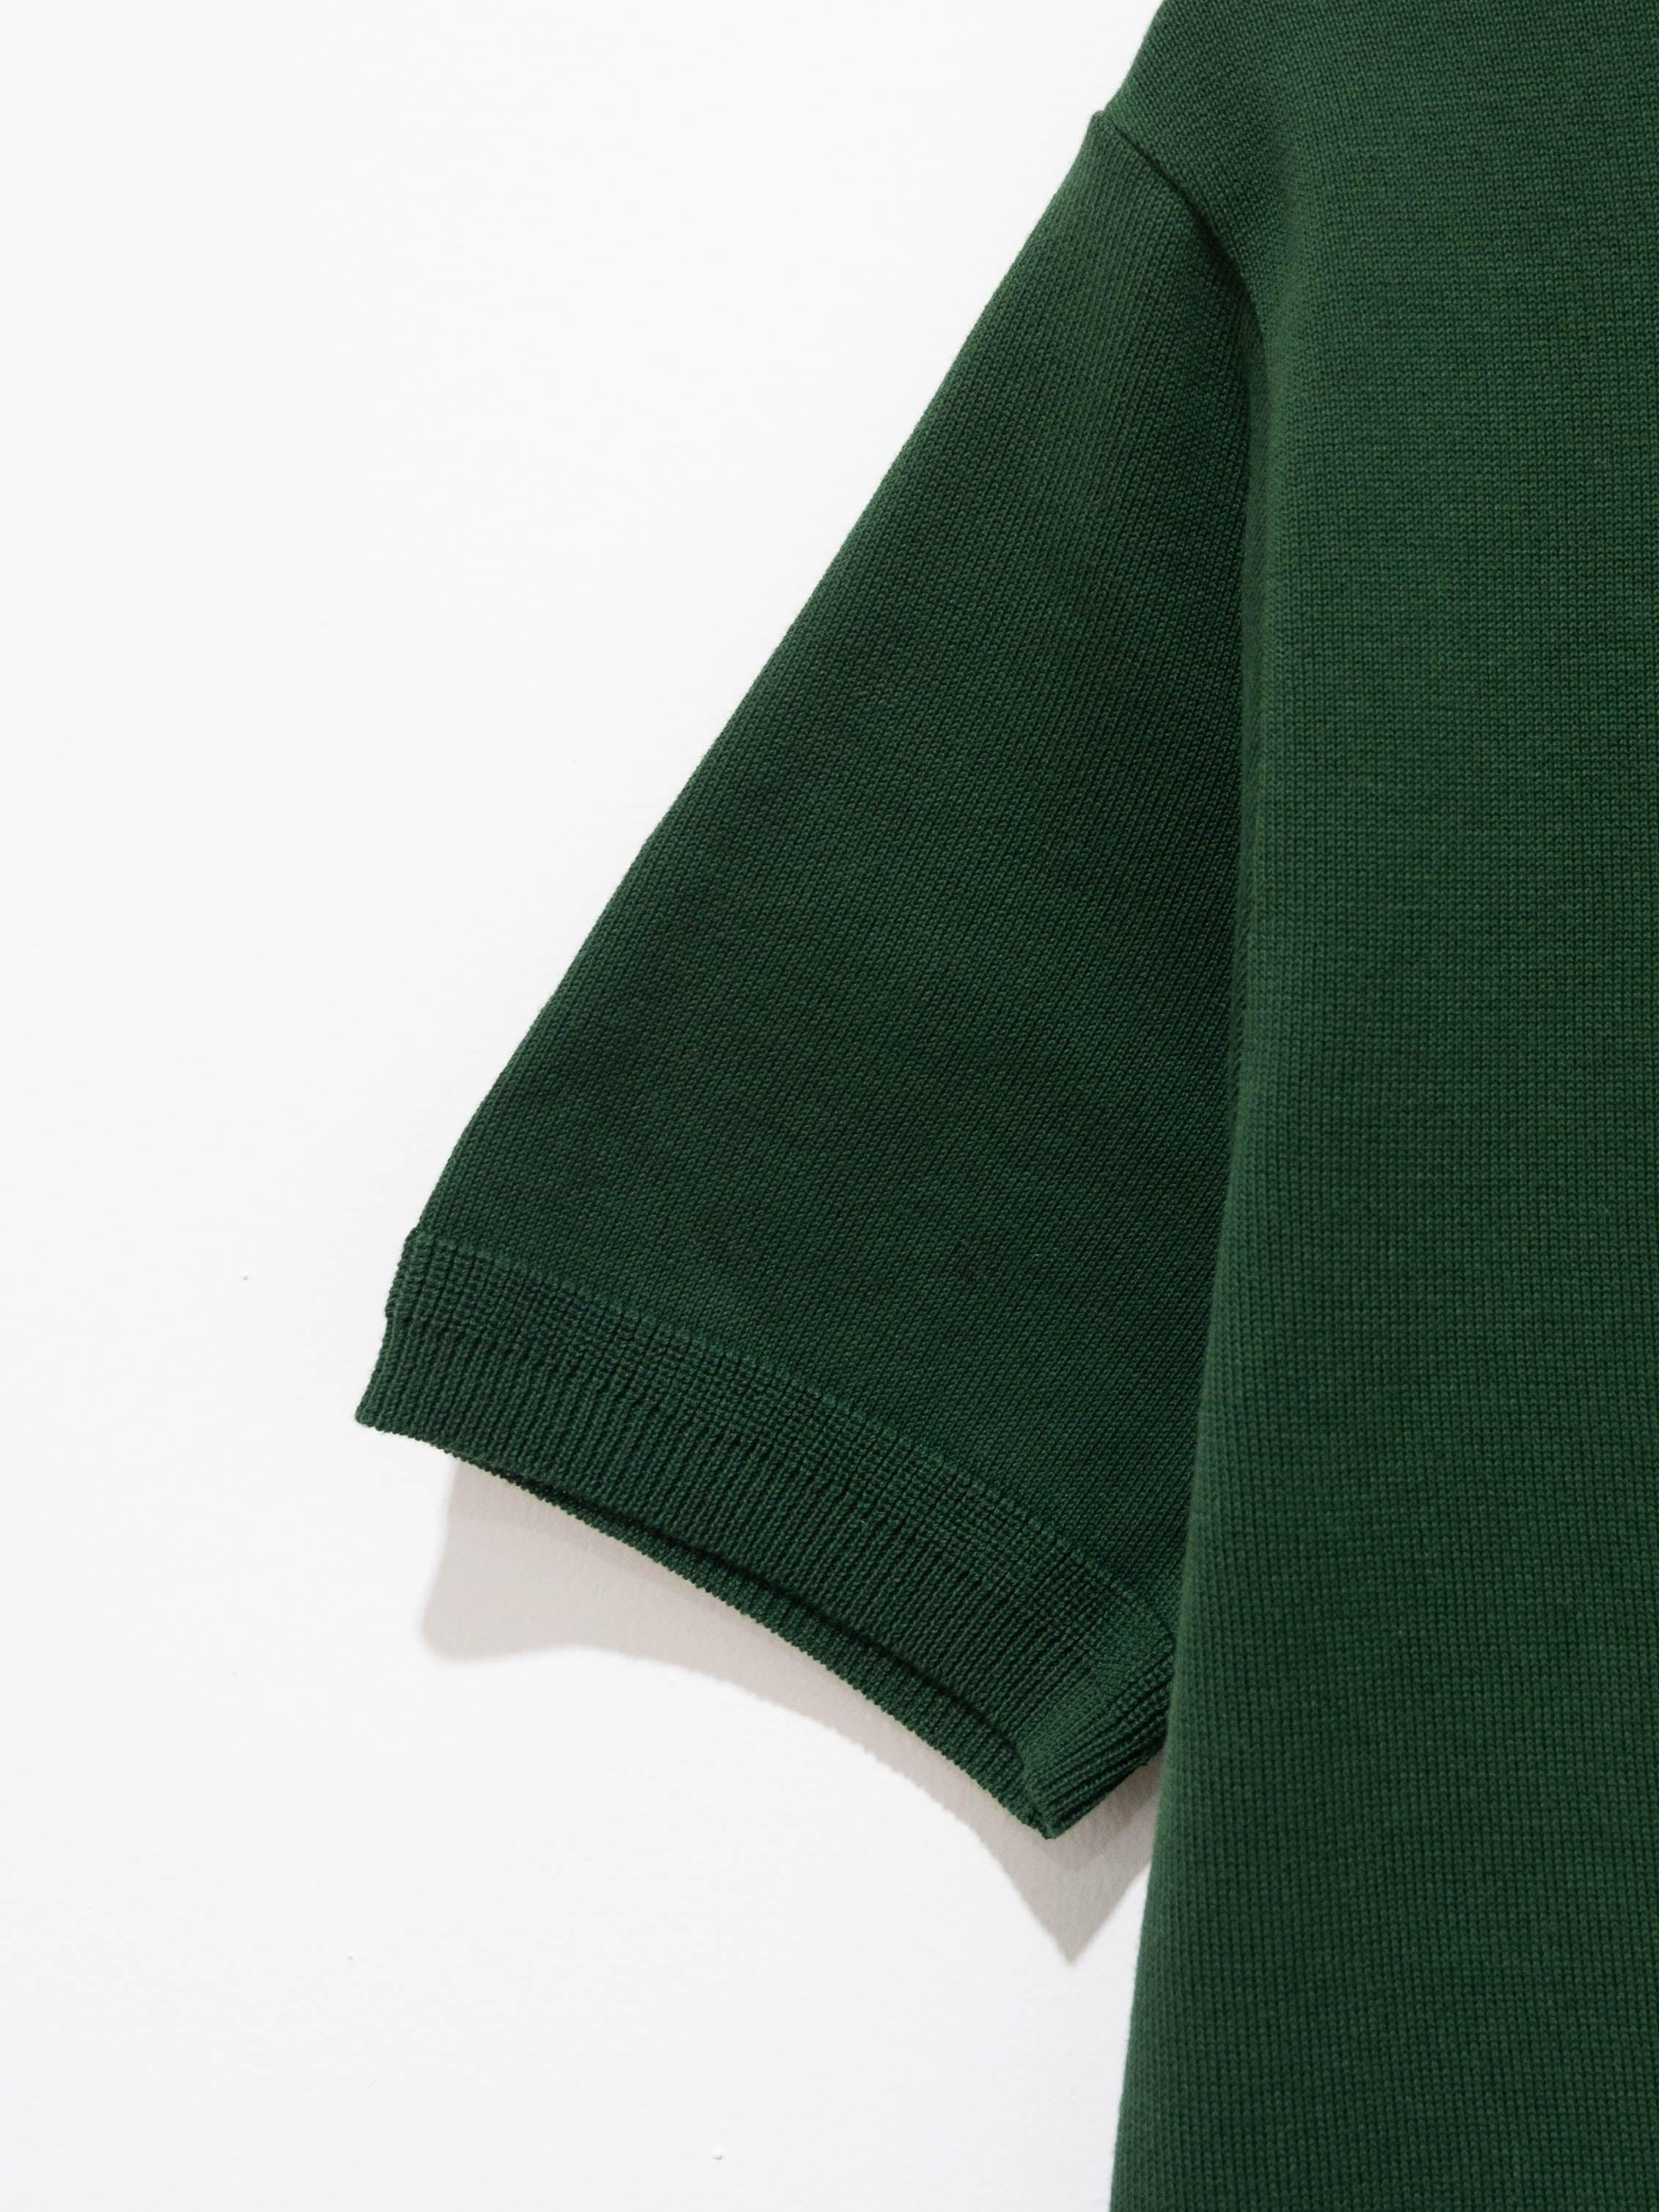 Namu Shop - Fujito C/N Knit T-Shirt - Forest Green